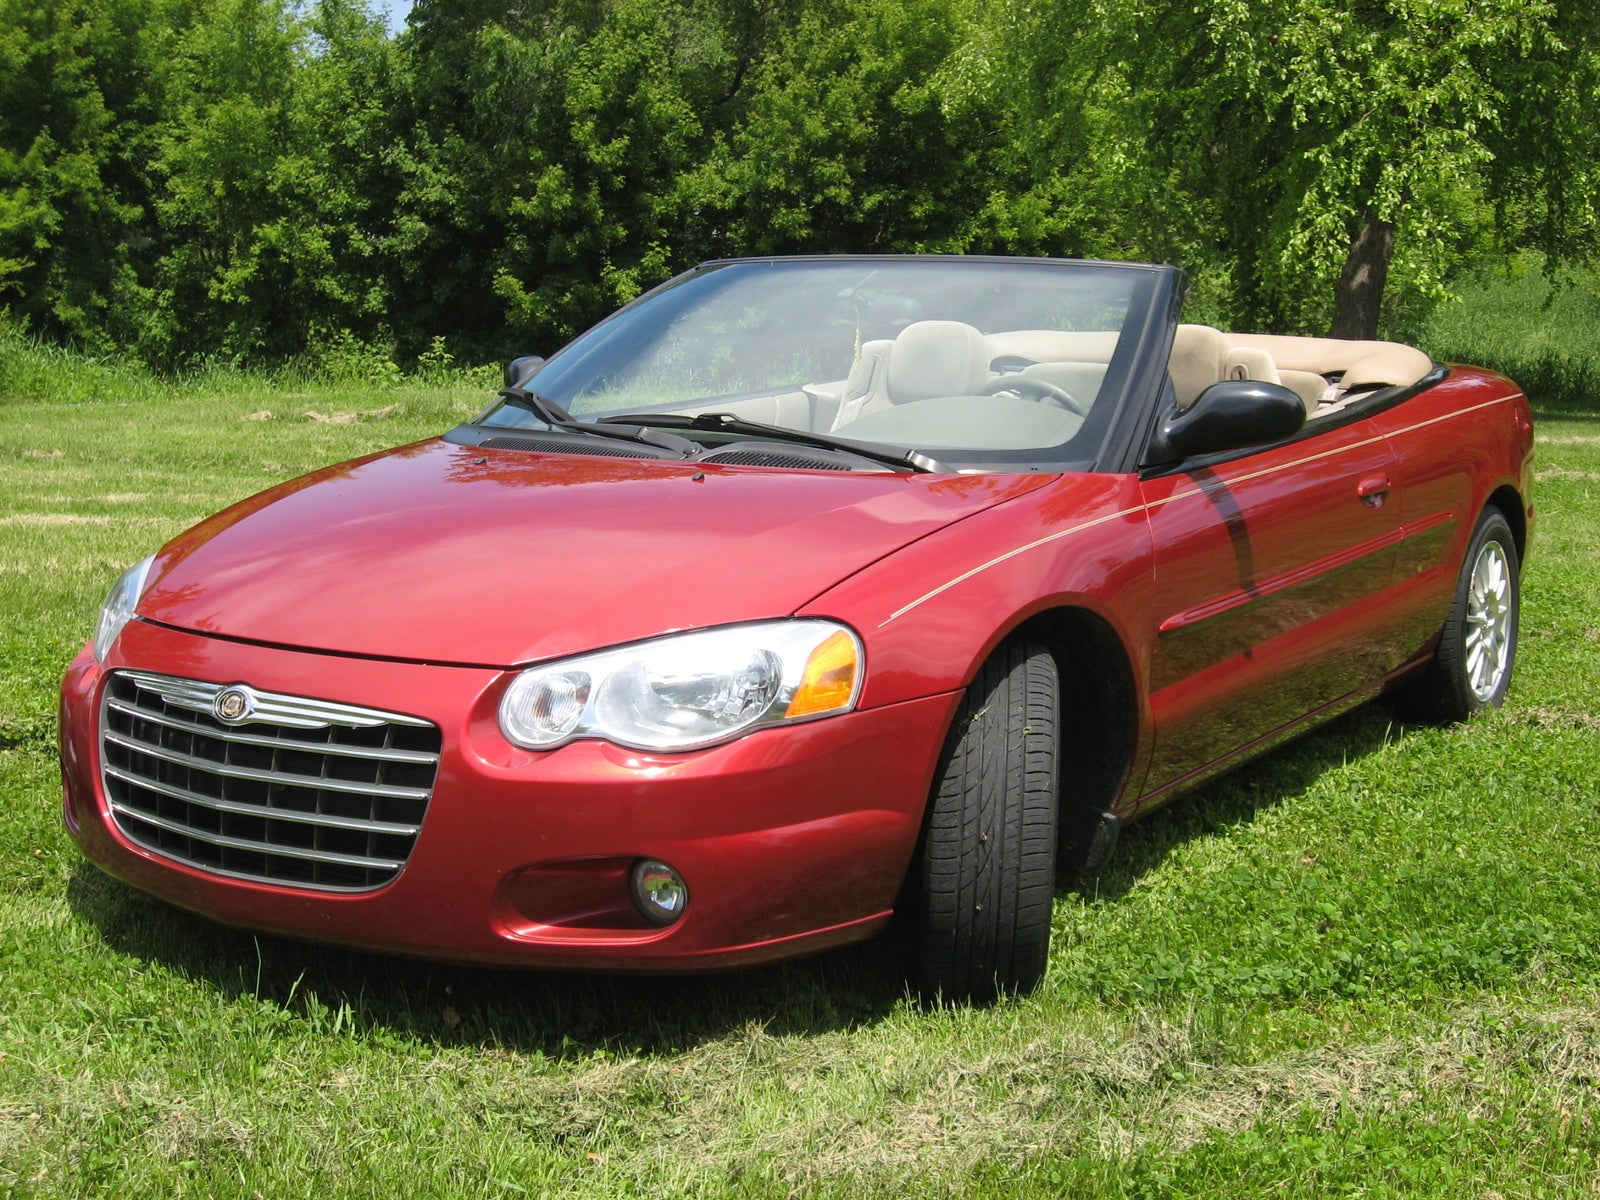 2003 Chrysler sebring convertible problems